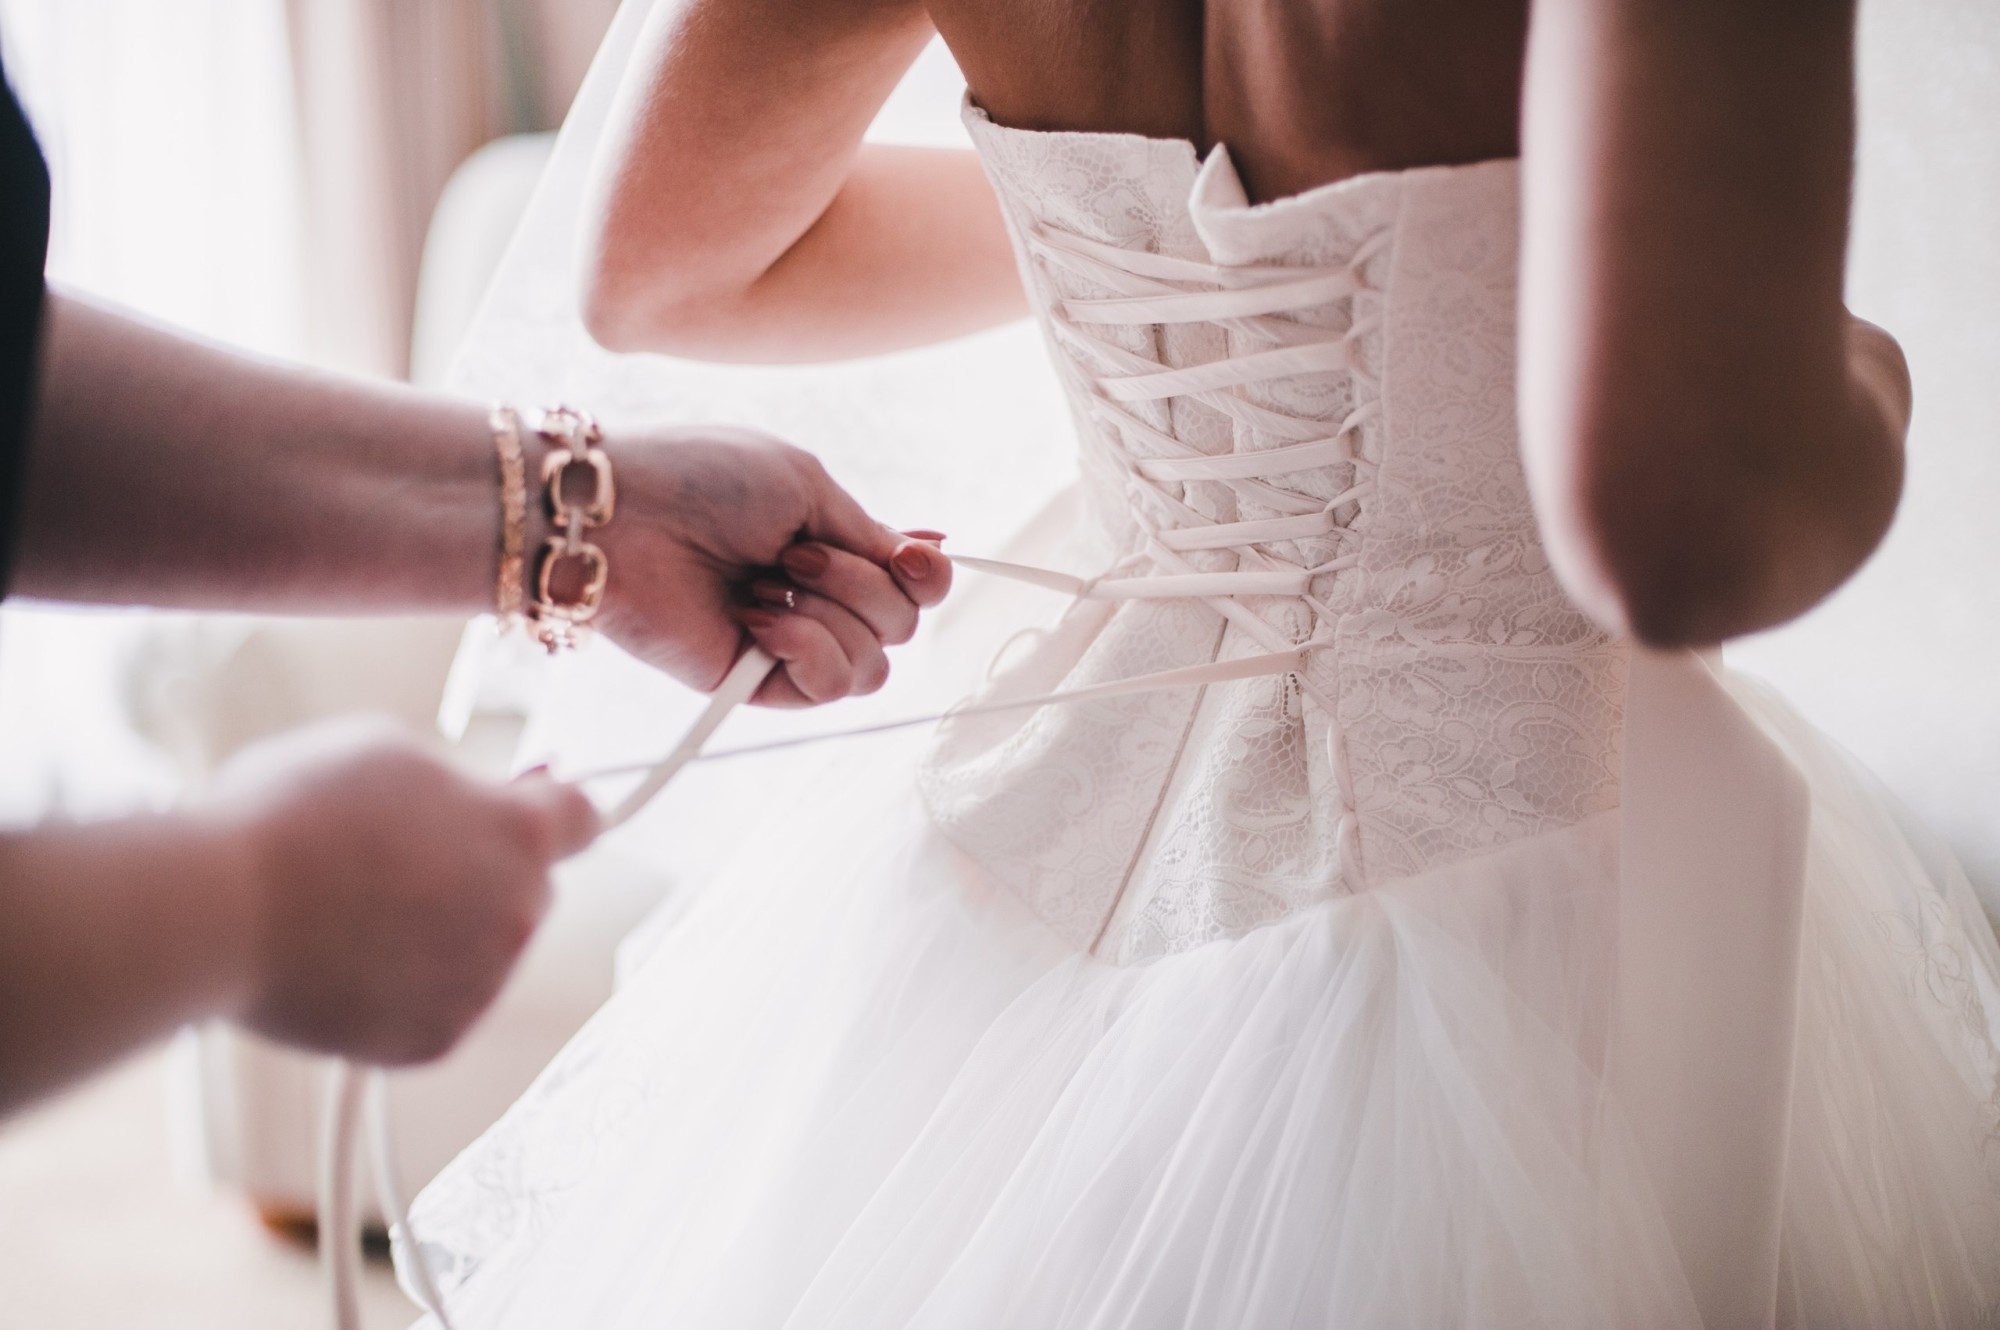 woman tying wedding dress